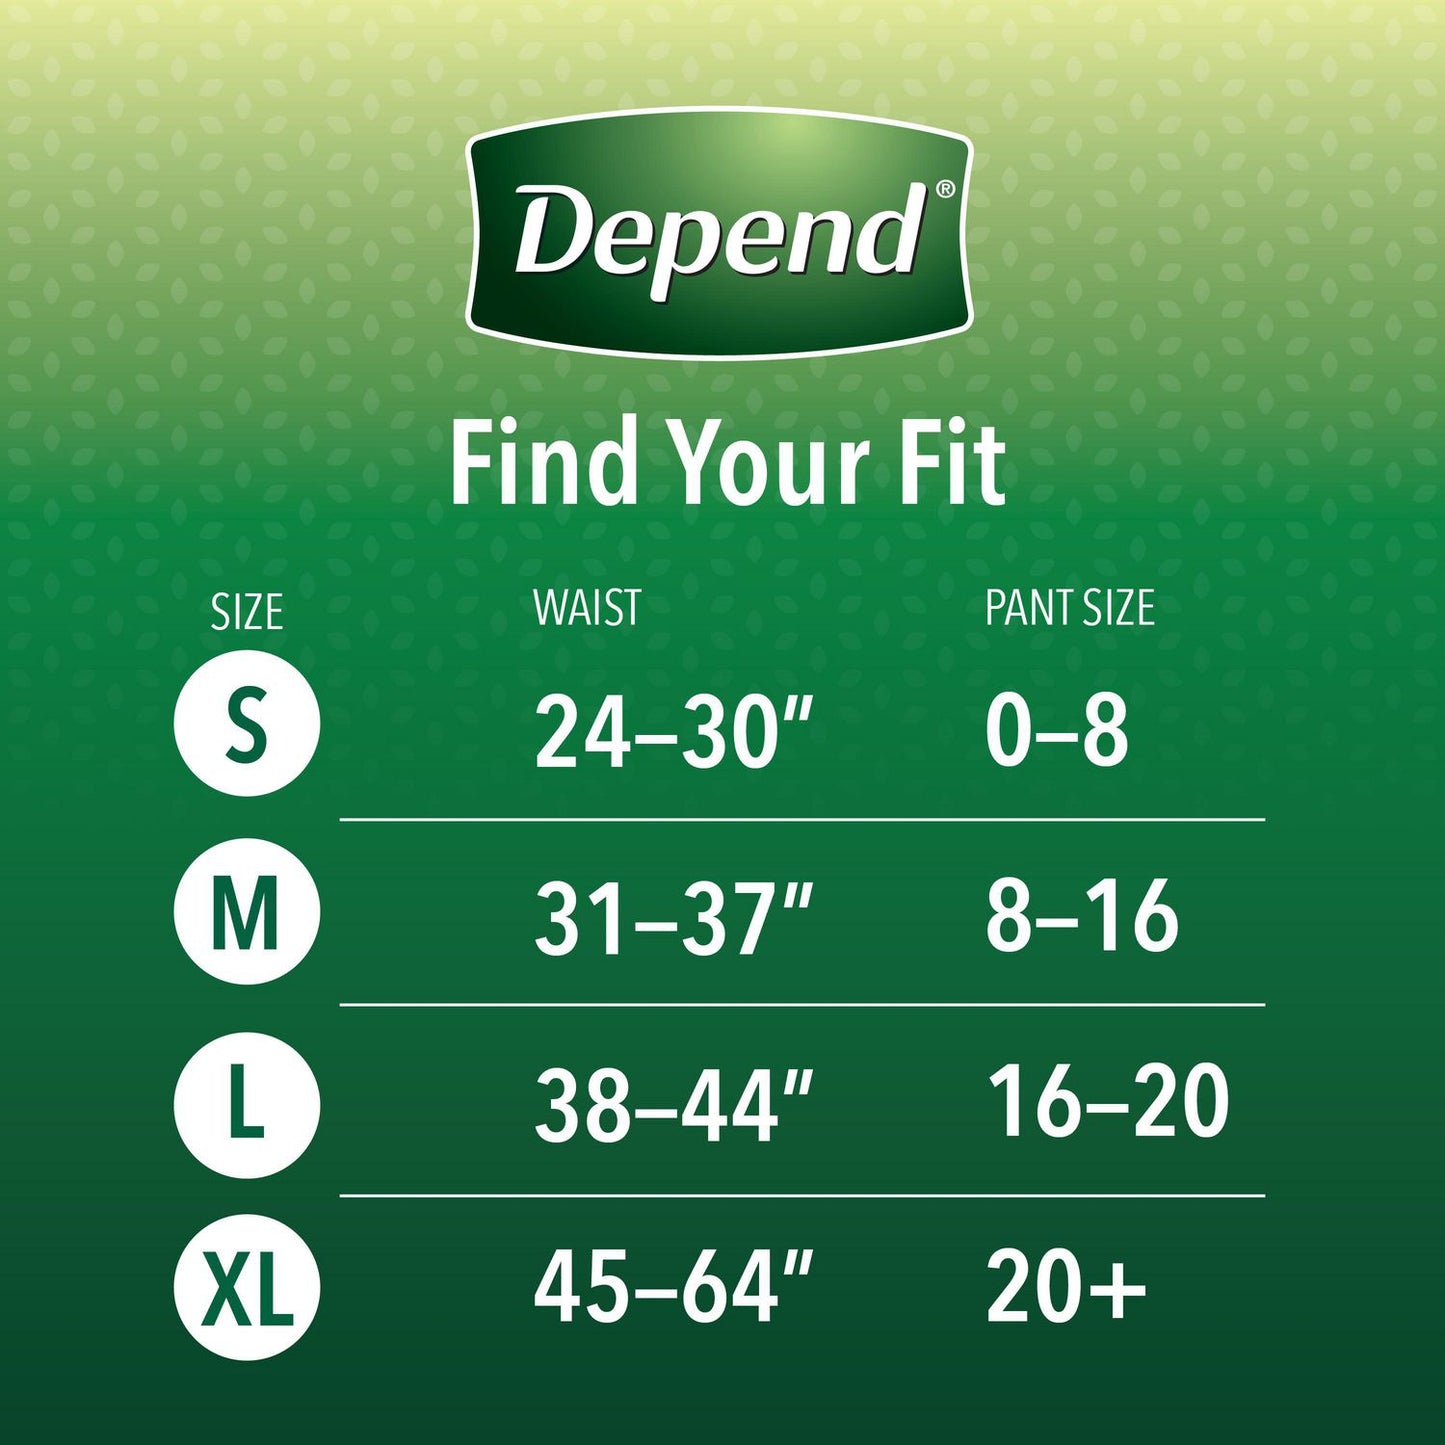 Depend Fit-Flex Underwear for Women - Small Size Maximum